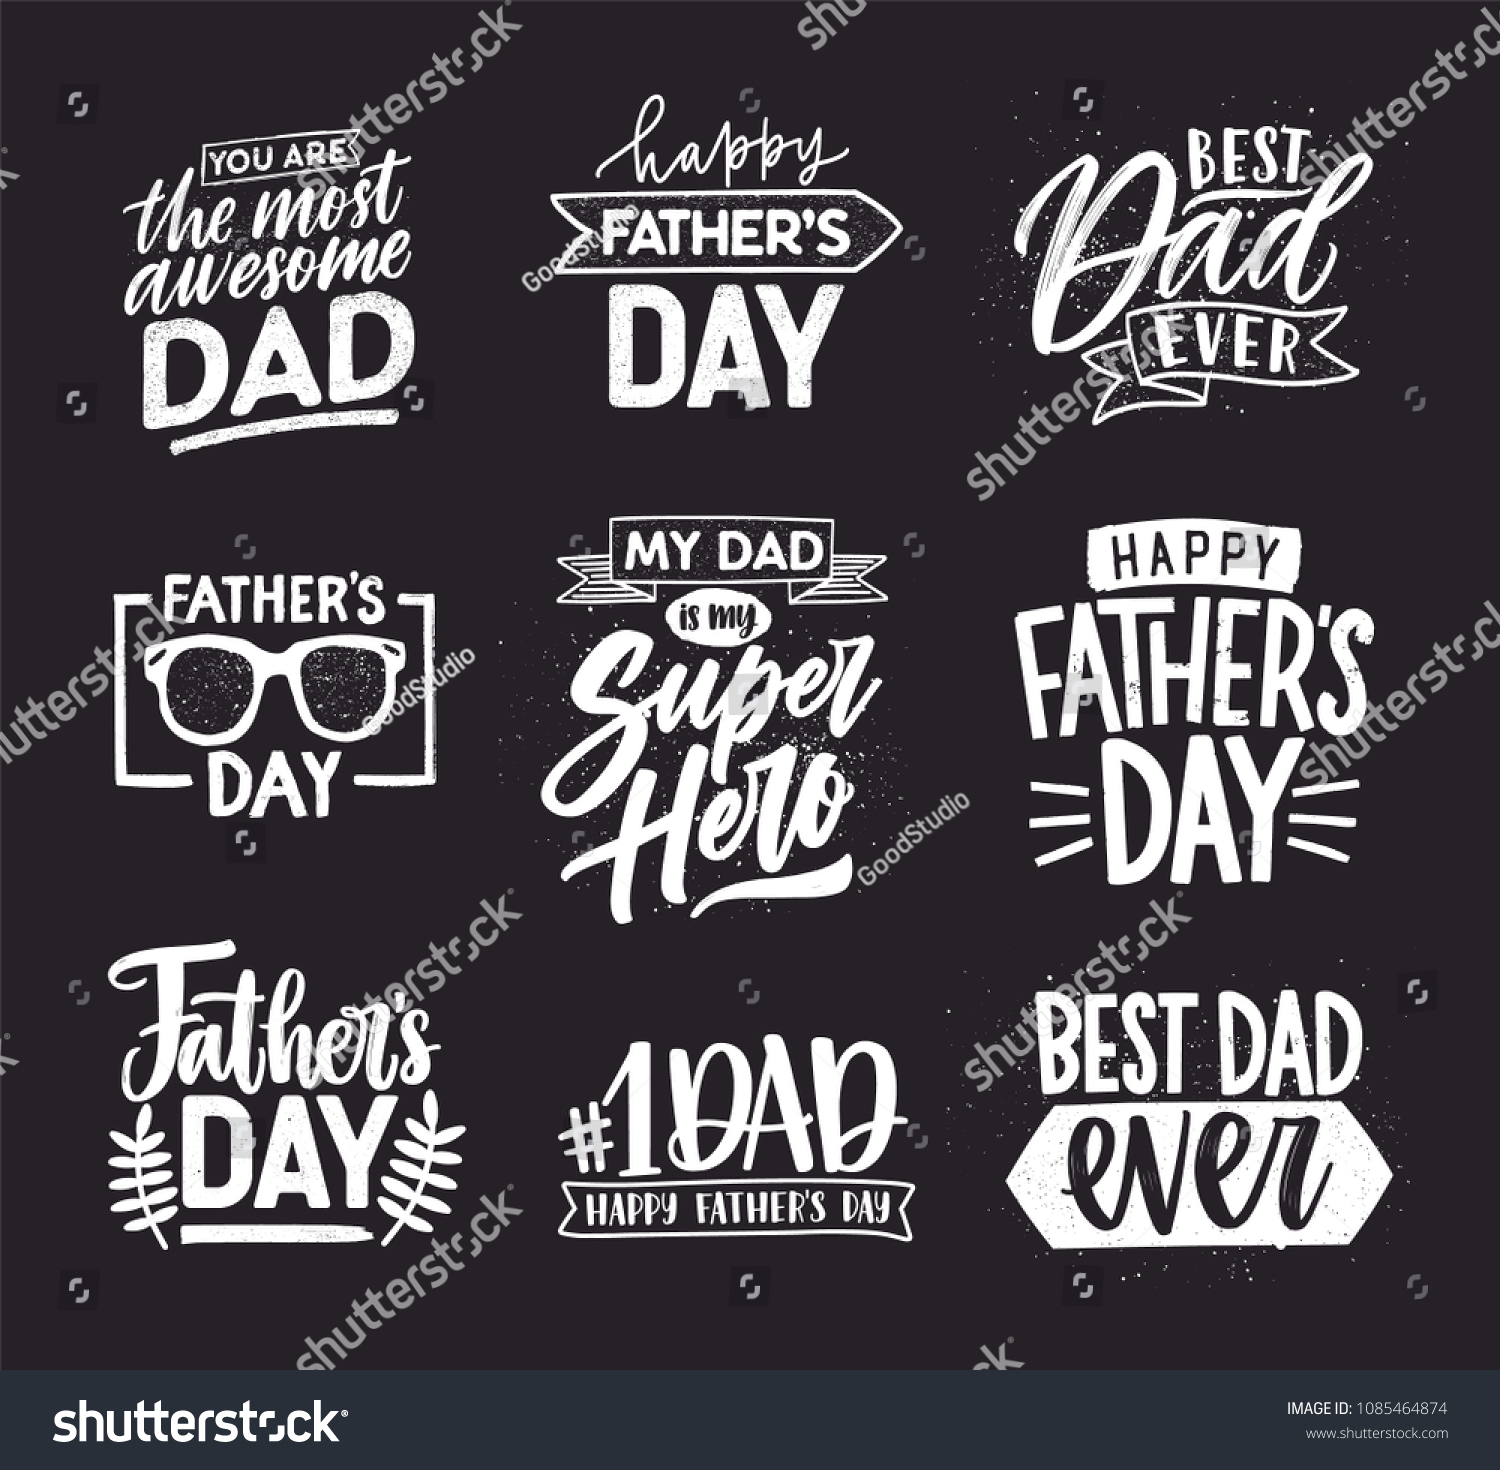 Dad letter Images, Stock Photos & Vectors | Shutterstock